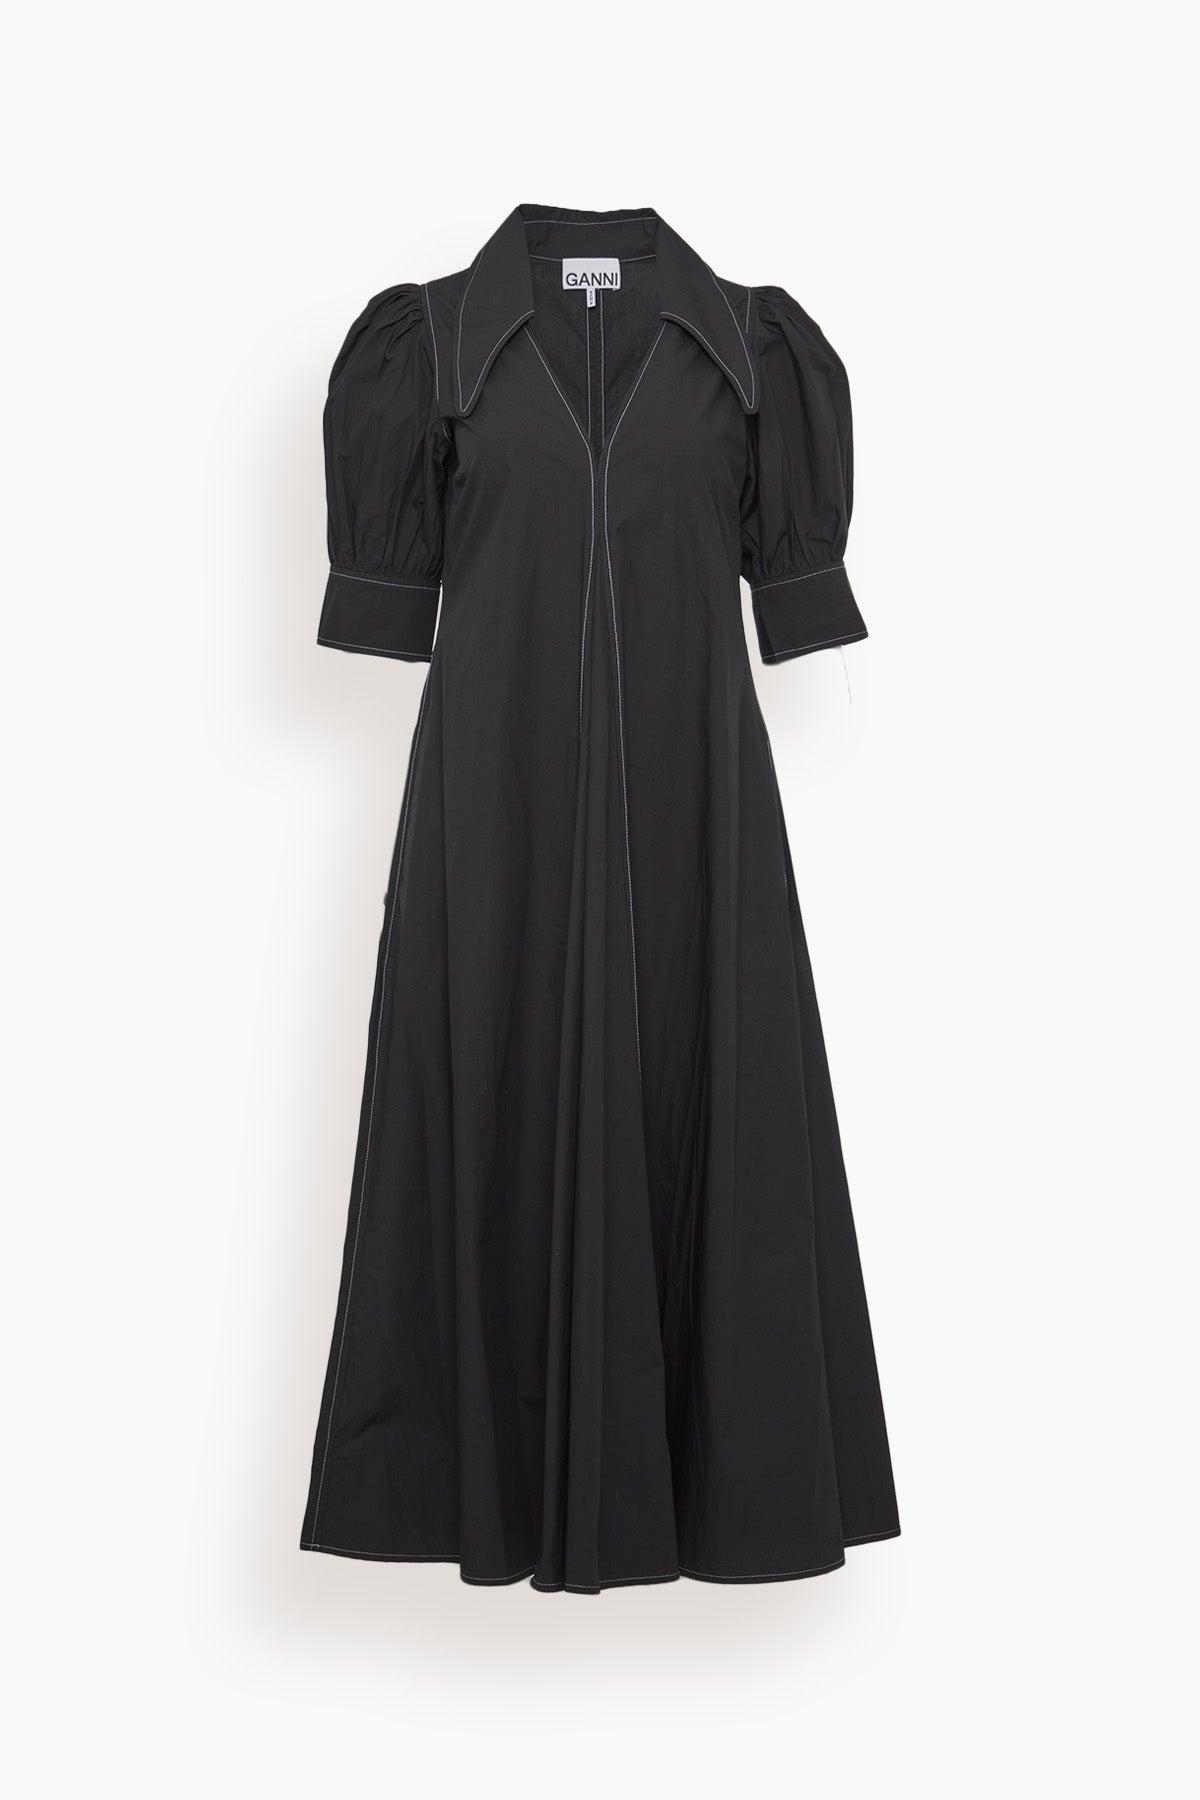 Ganni Cotton Poplin V-neck Dress in Black | Lyst